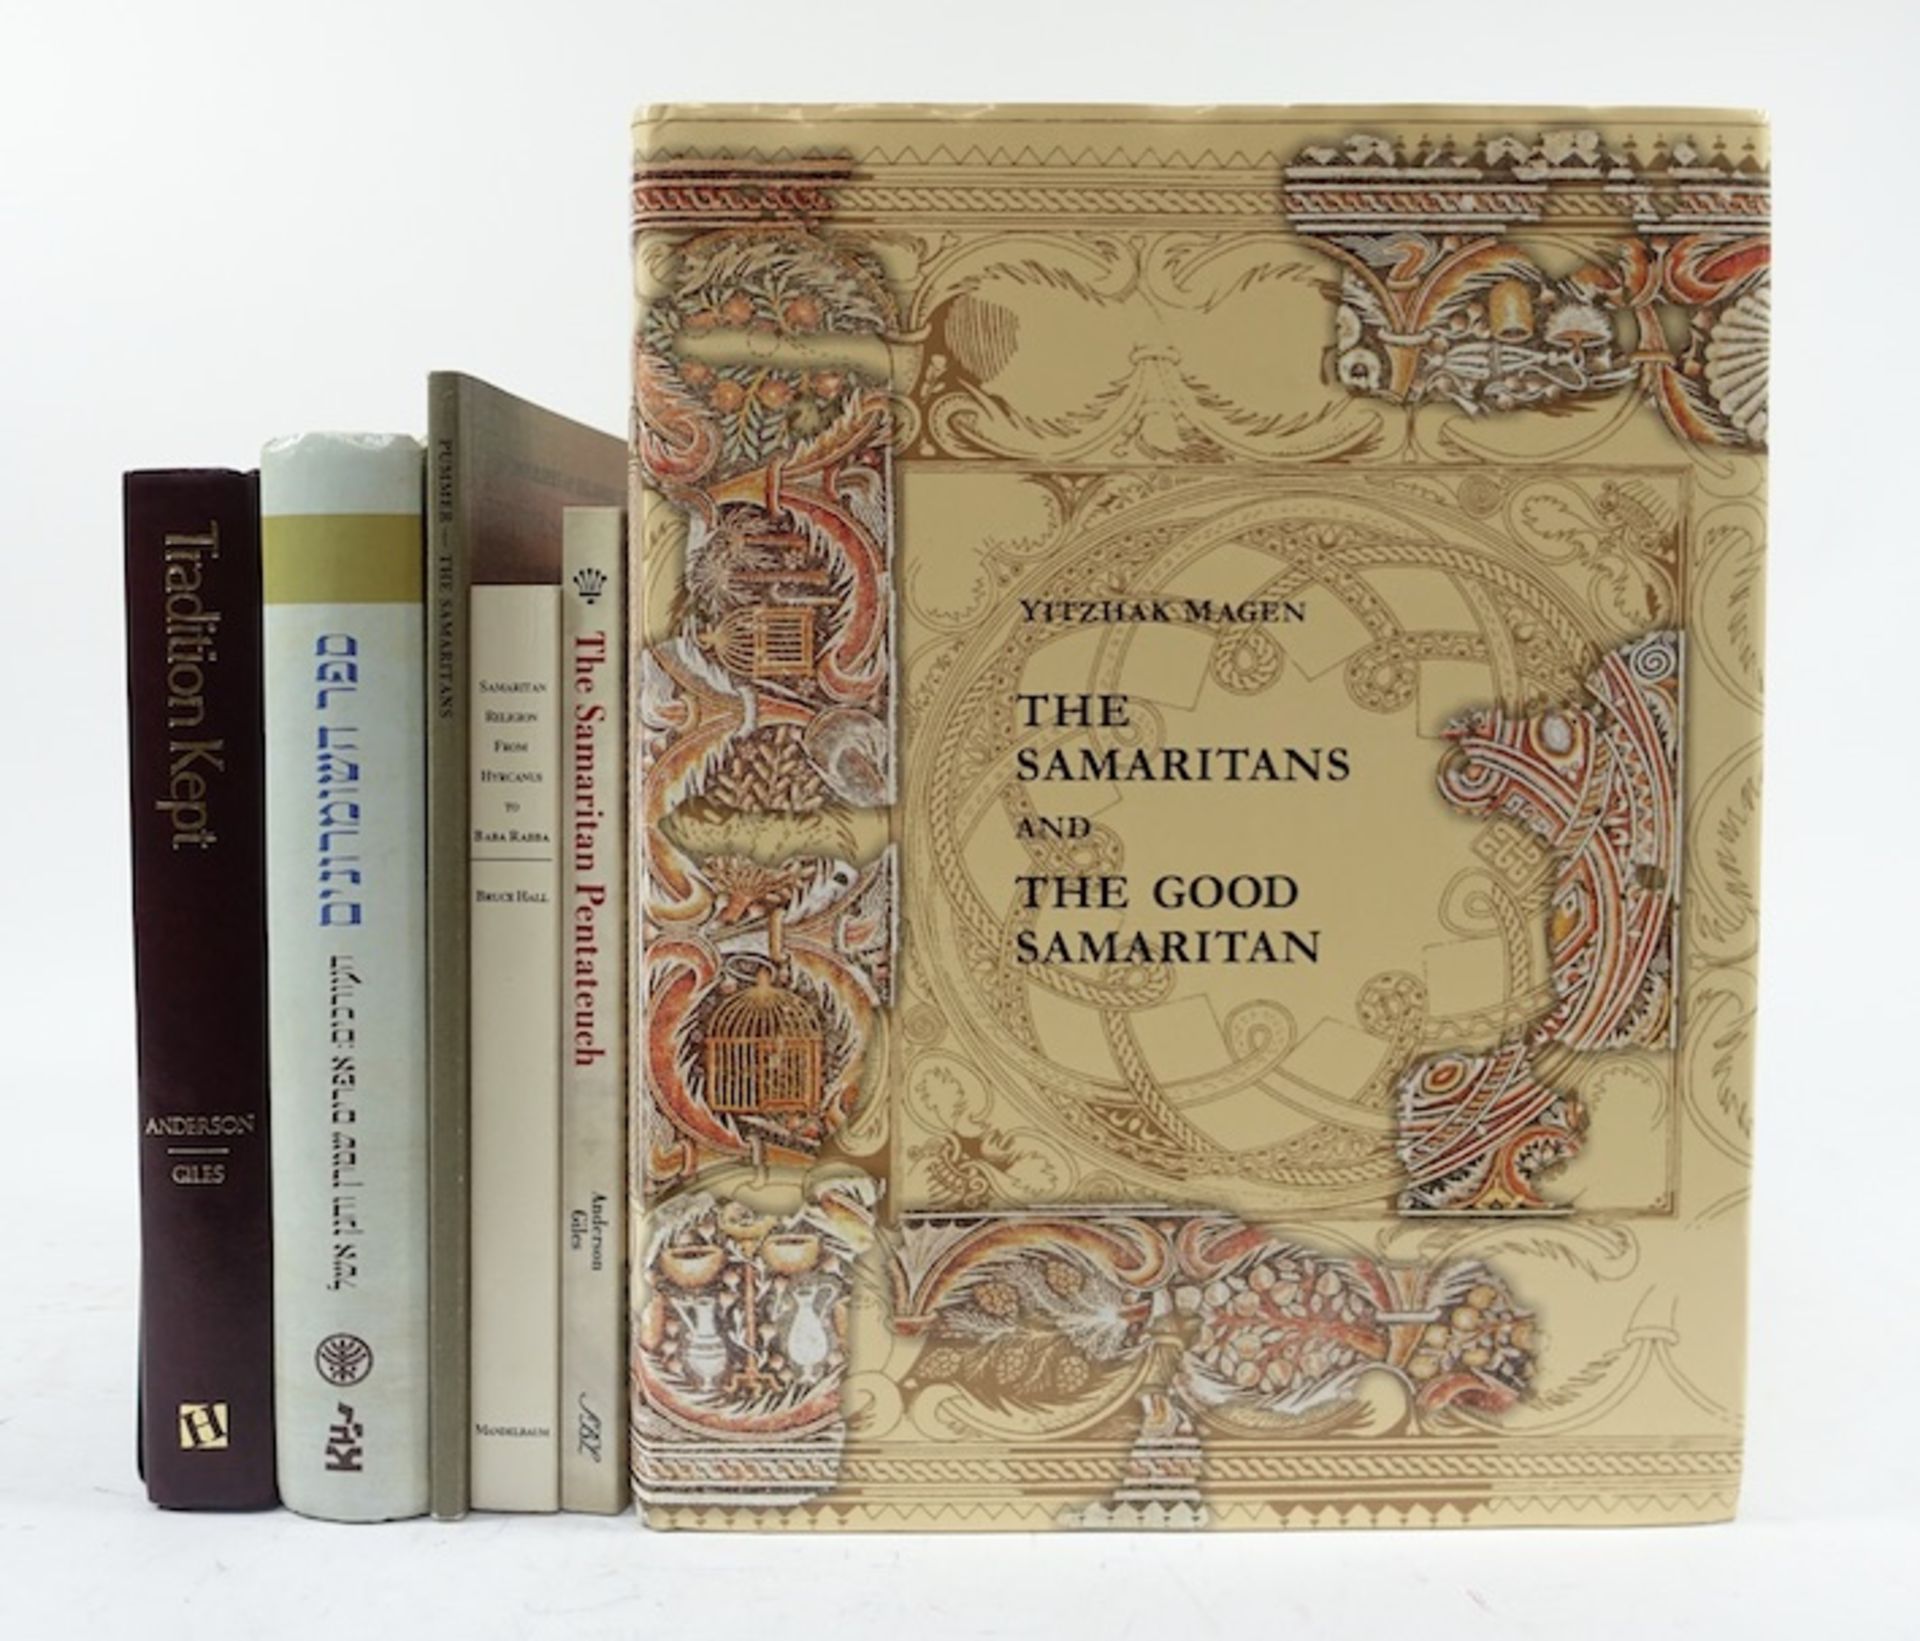 SAMARITANS -- MAGEN, Y. The Samaritans and the Good Samaritan. 2008. Prof. ill. 4°. Obrds. w. dust-